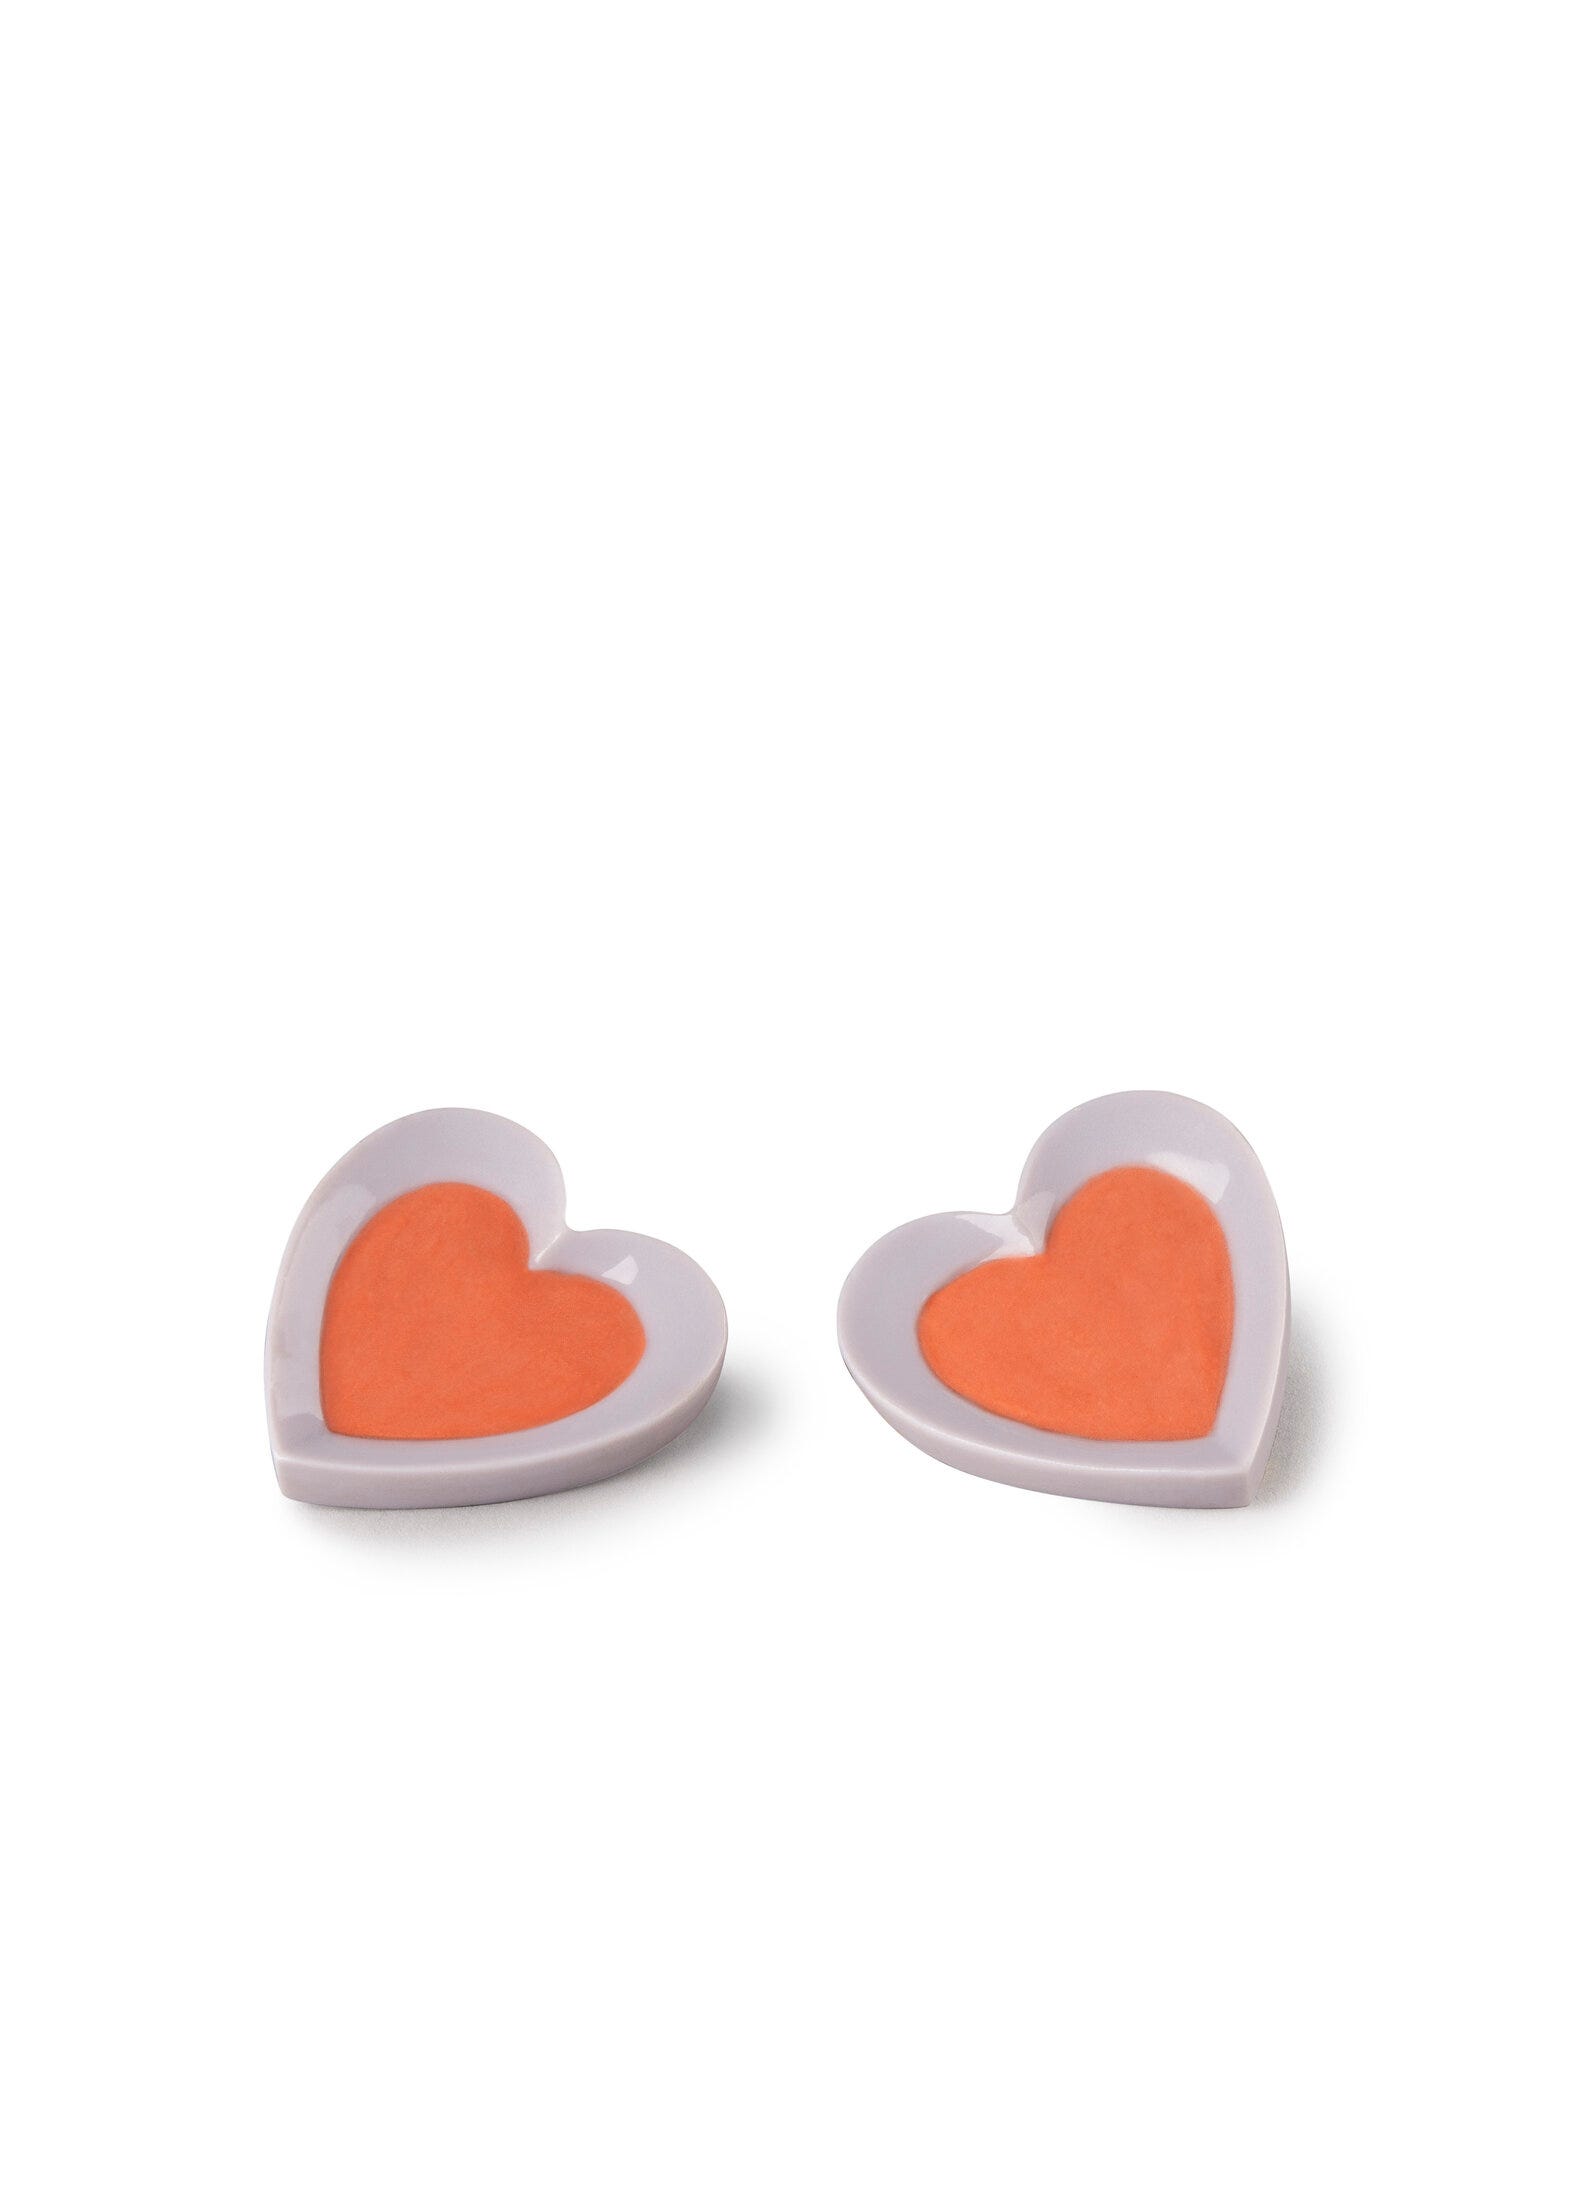 Buy Glitter Red Hearts Earrings Online in India  Etsy